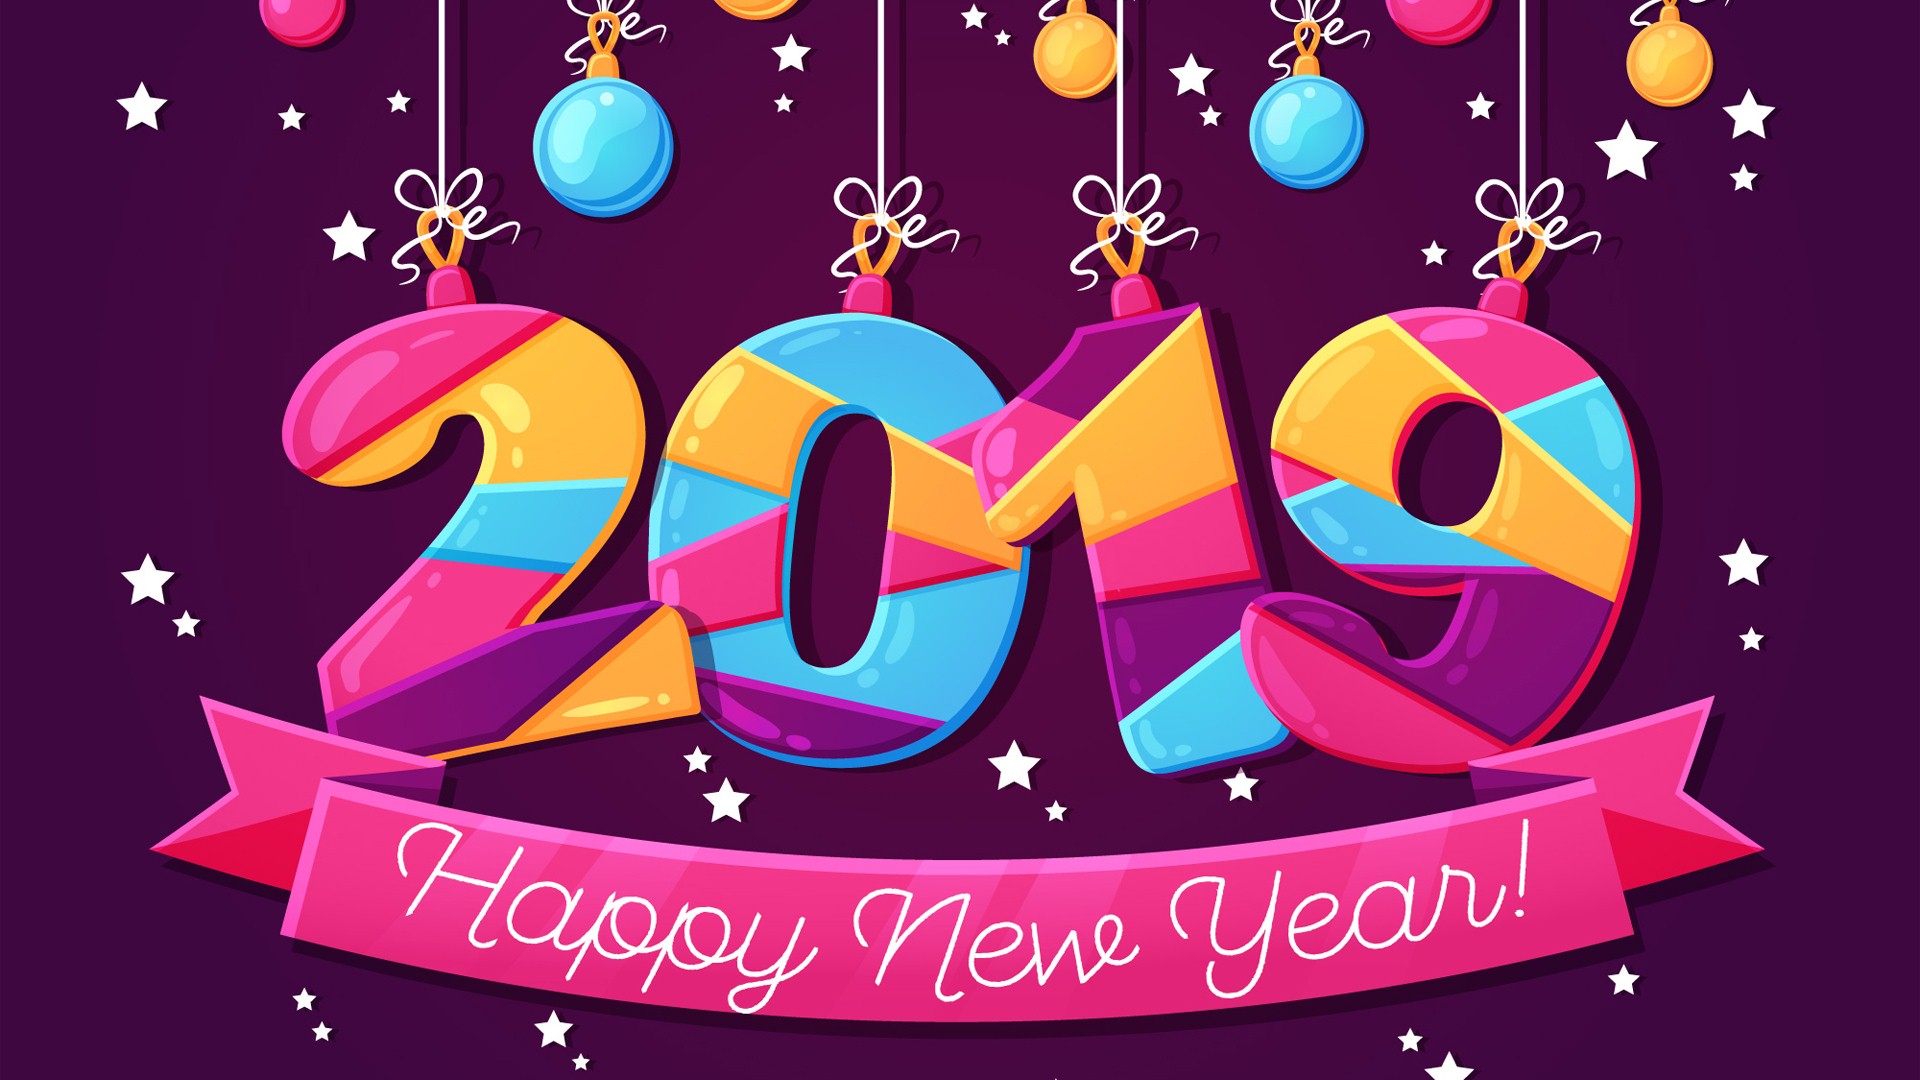 2019 Happy New Year Hd Pink Image - 2019 Happy New Year Hd - HD Wallpaper 